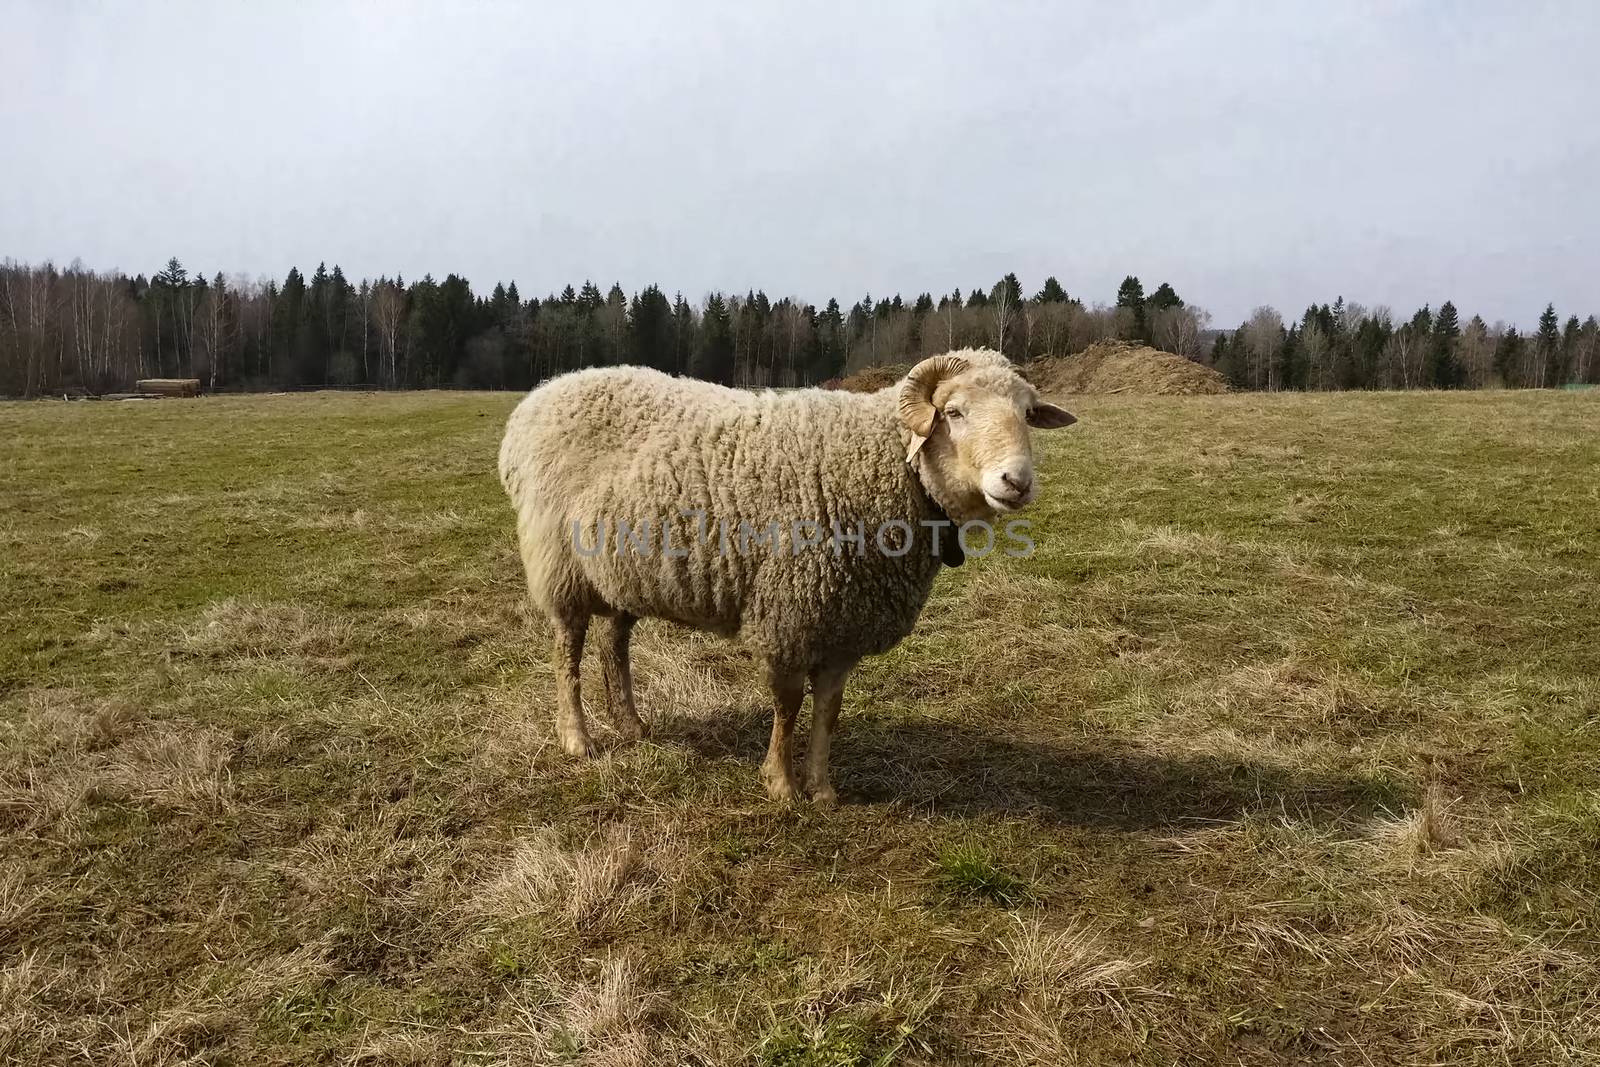 Sheep in paddock on the farm. Breeding sheep on the farm and feeding hay. by DePo